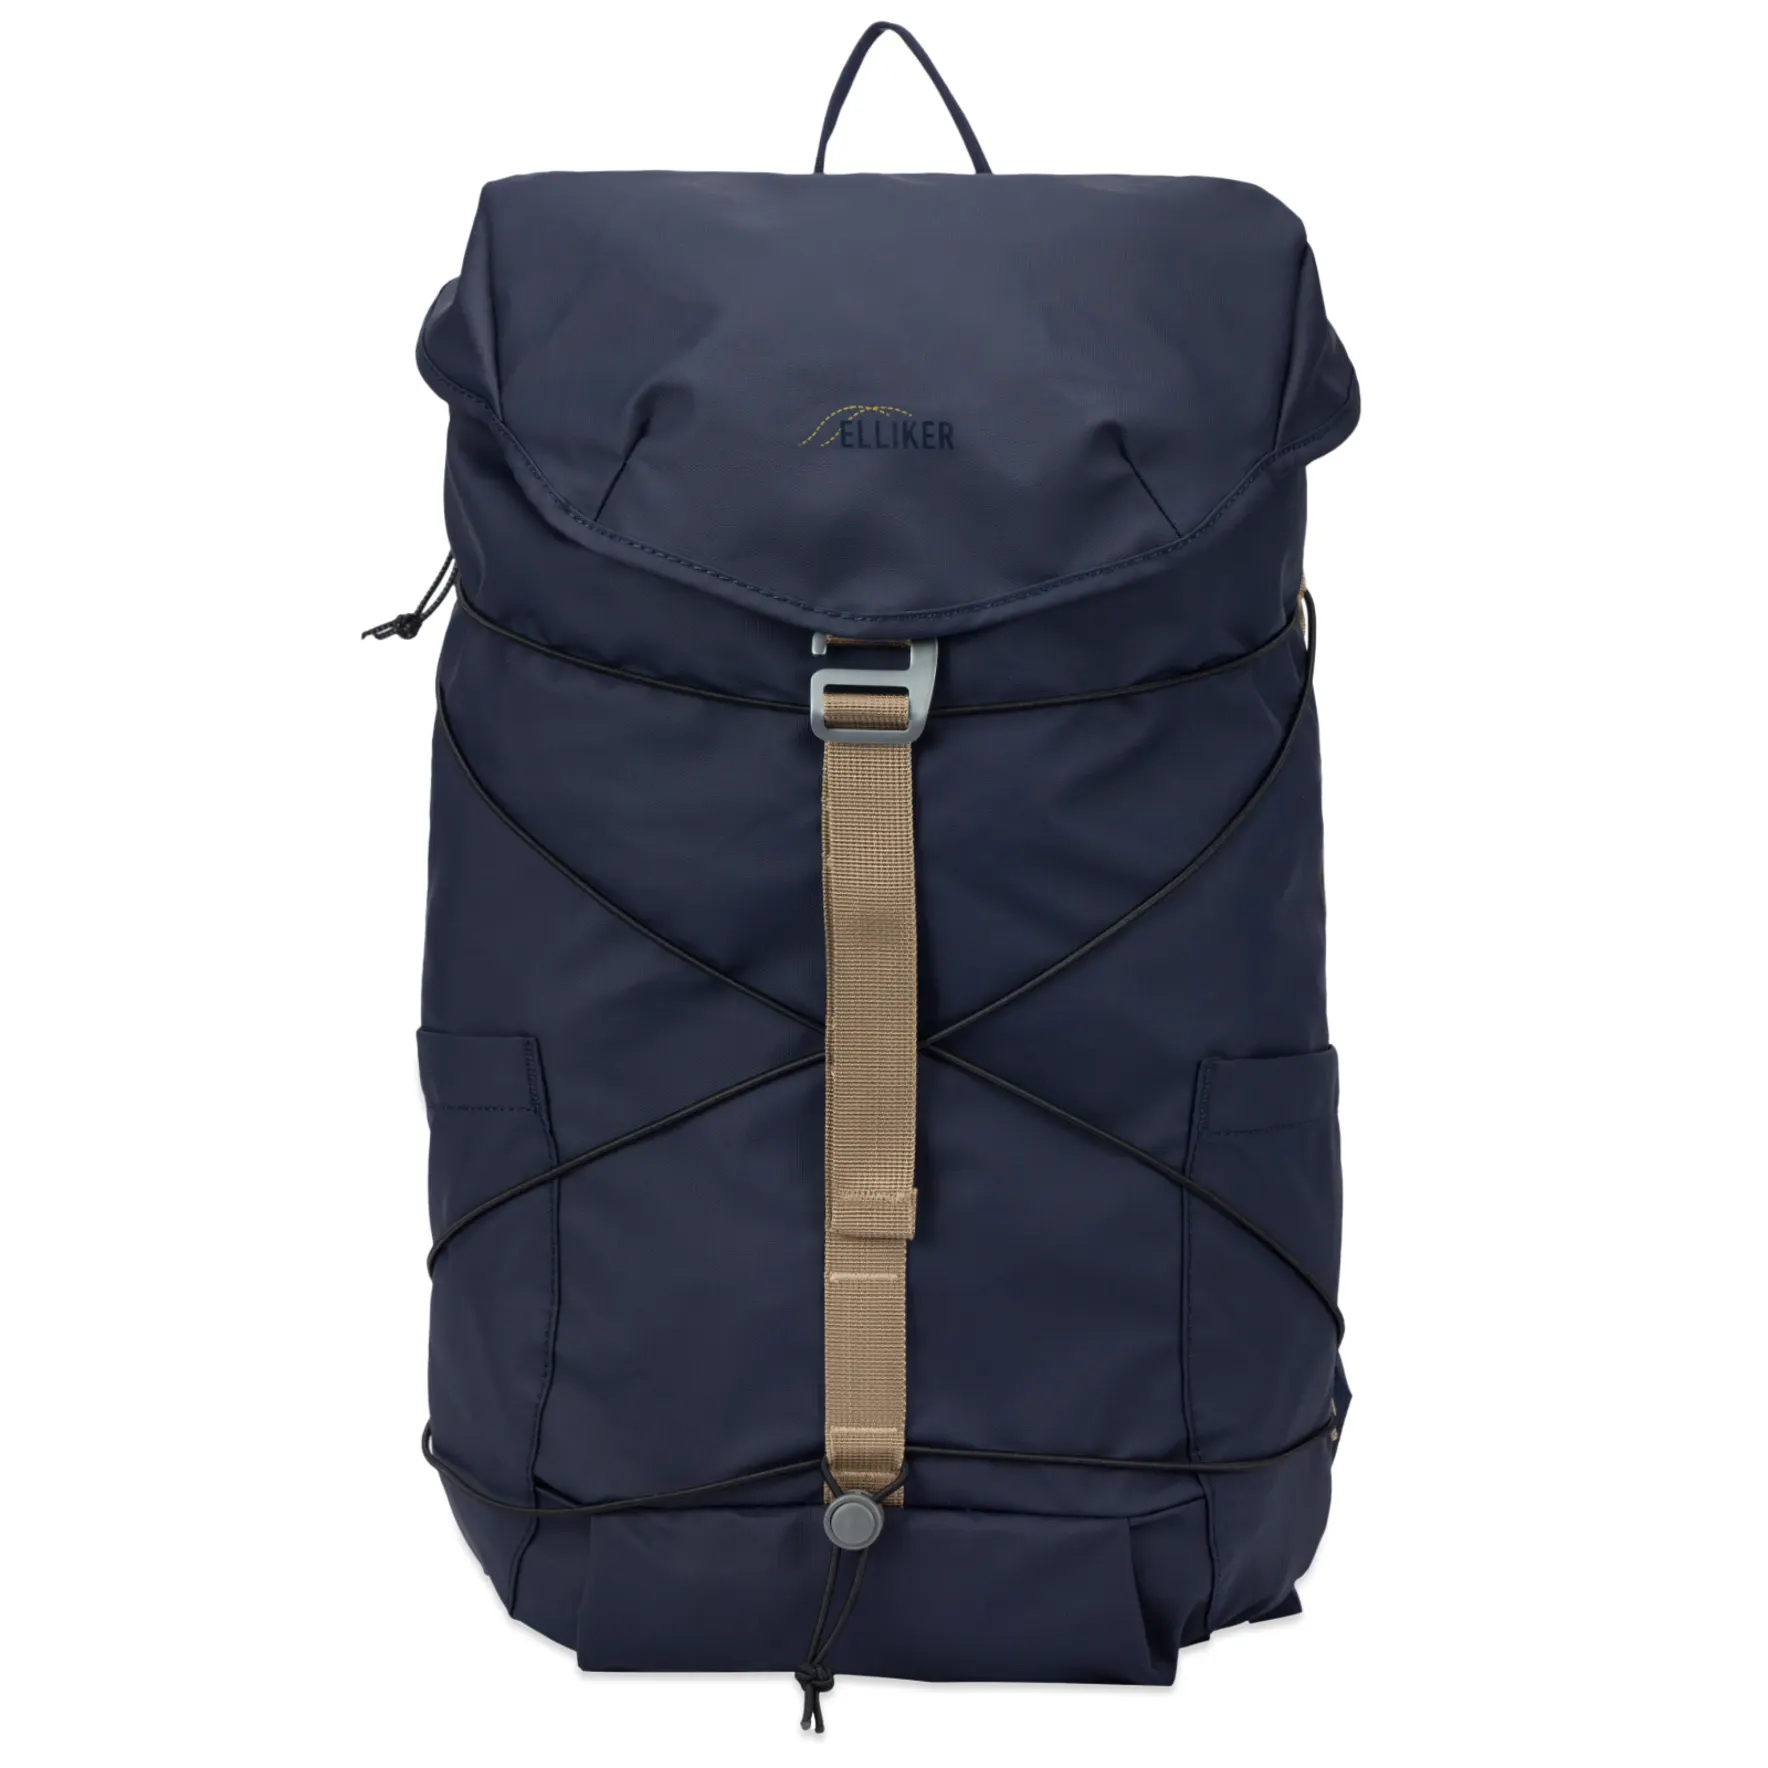 Рюкзак Elliker Wharfe Flapover Backpack, темно-синий рюкзак elliker wharfe brown